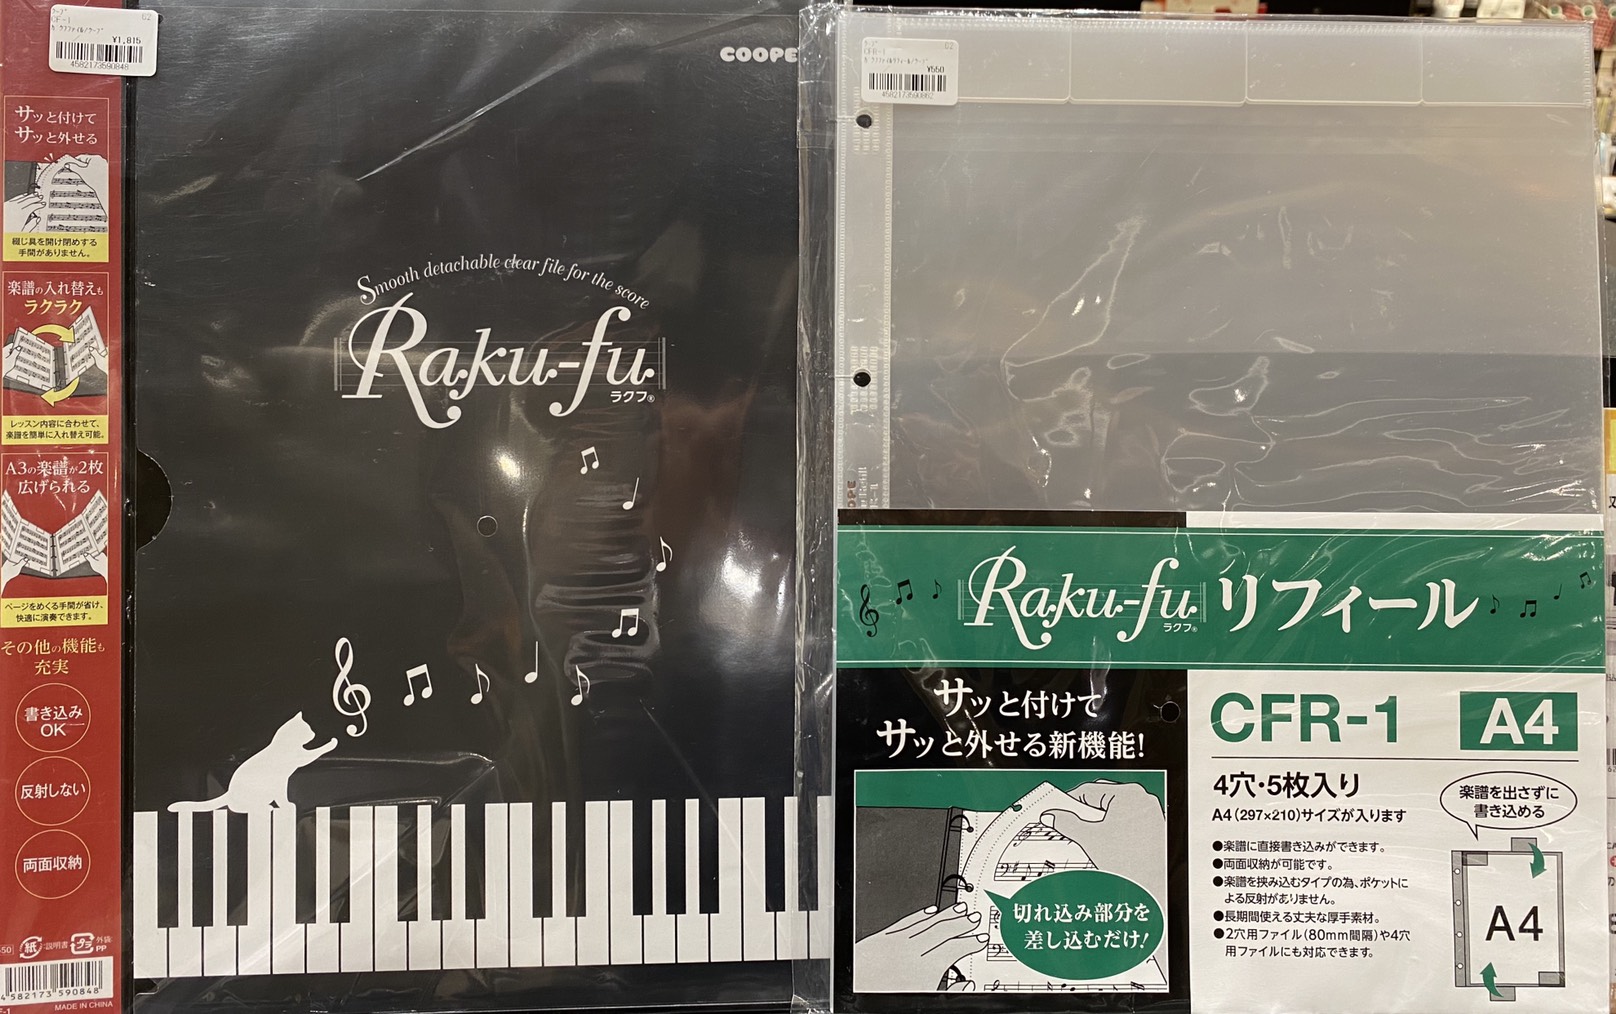 *Raku-fu【ラクフ】（演奏者のためのラクラクファイル） 吹奏楽・ピアノだけでなくすべての楽器演奏者のための楽譜ファイル『Raku-Fu【ラクフ】』。]]島村楽器ららぽーと豊洲店では、そんな演奏者のためのラクラクファイル【ラクフ】を種類豊富に取り揃えております！]]見本もご用意してございますので […]